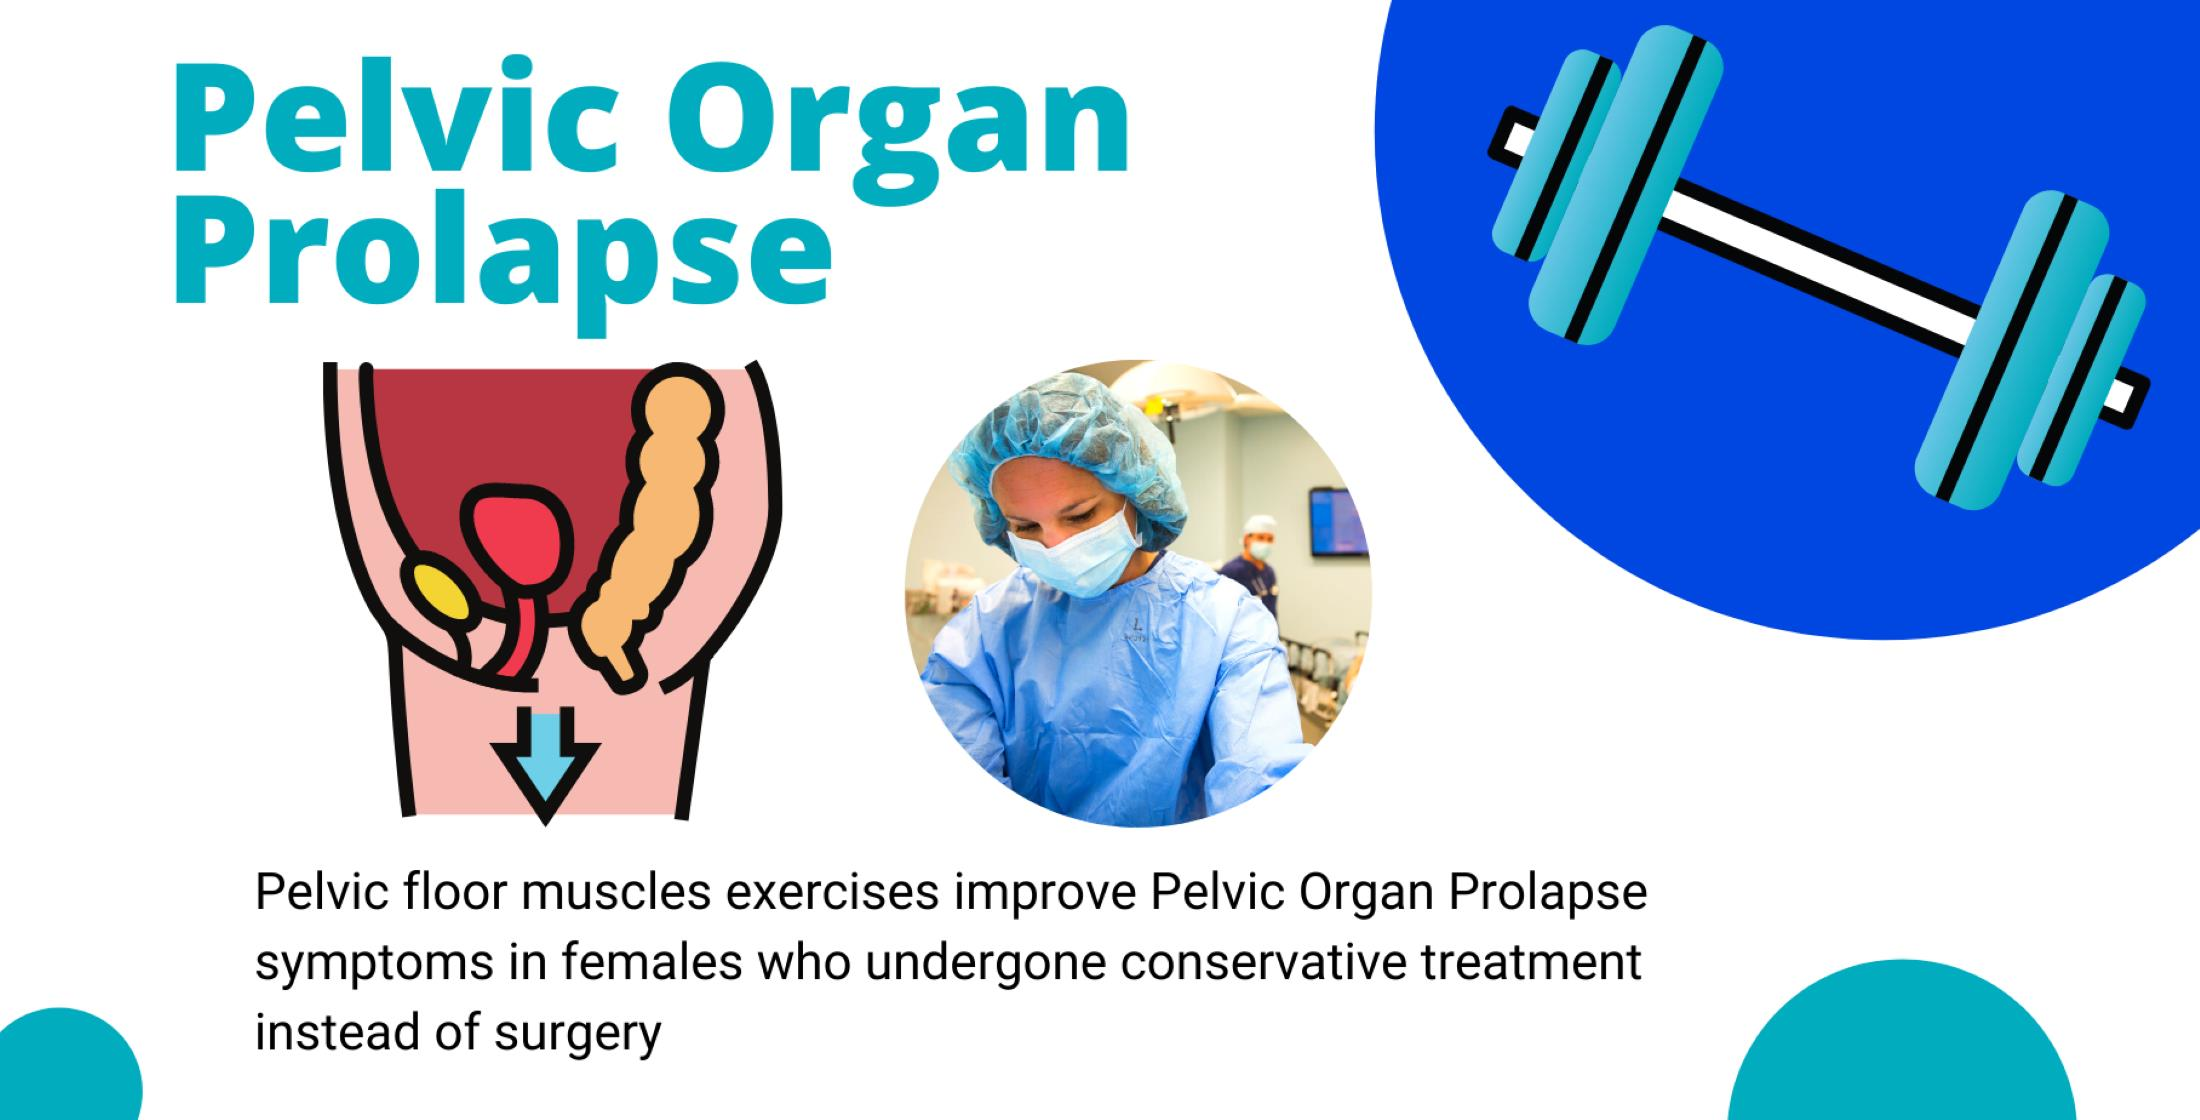 Pelvic Organ Prolapse Treatment & Management: Medical Therapy, Surgical  Therapy, Surgical Management of Anterior Vaginal Wall Prolapse